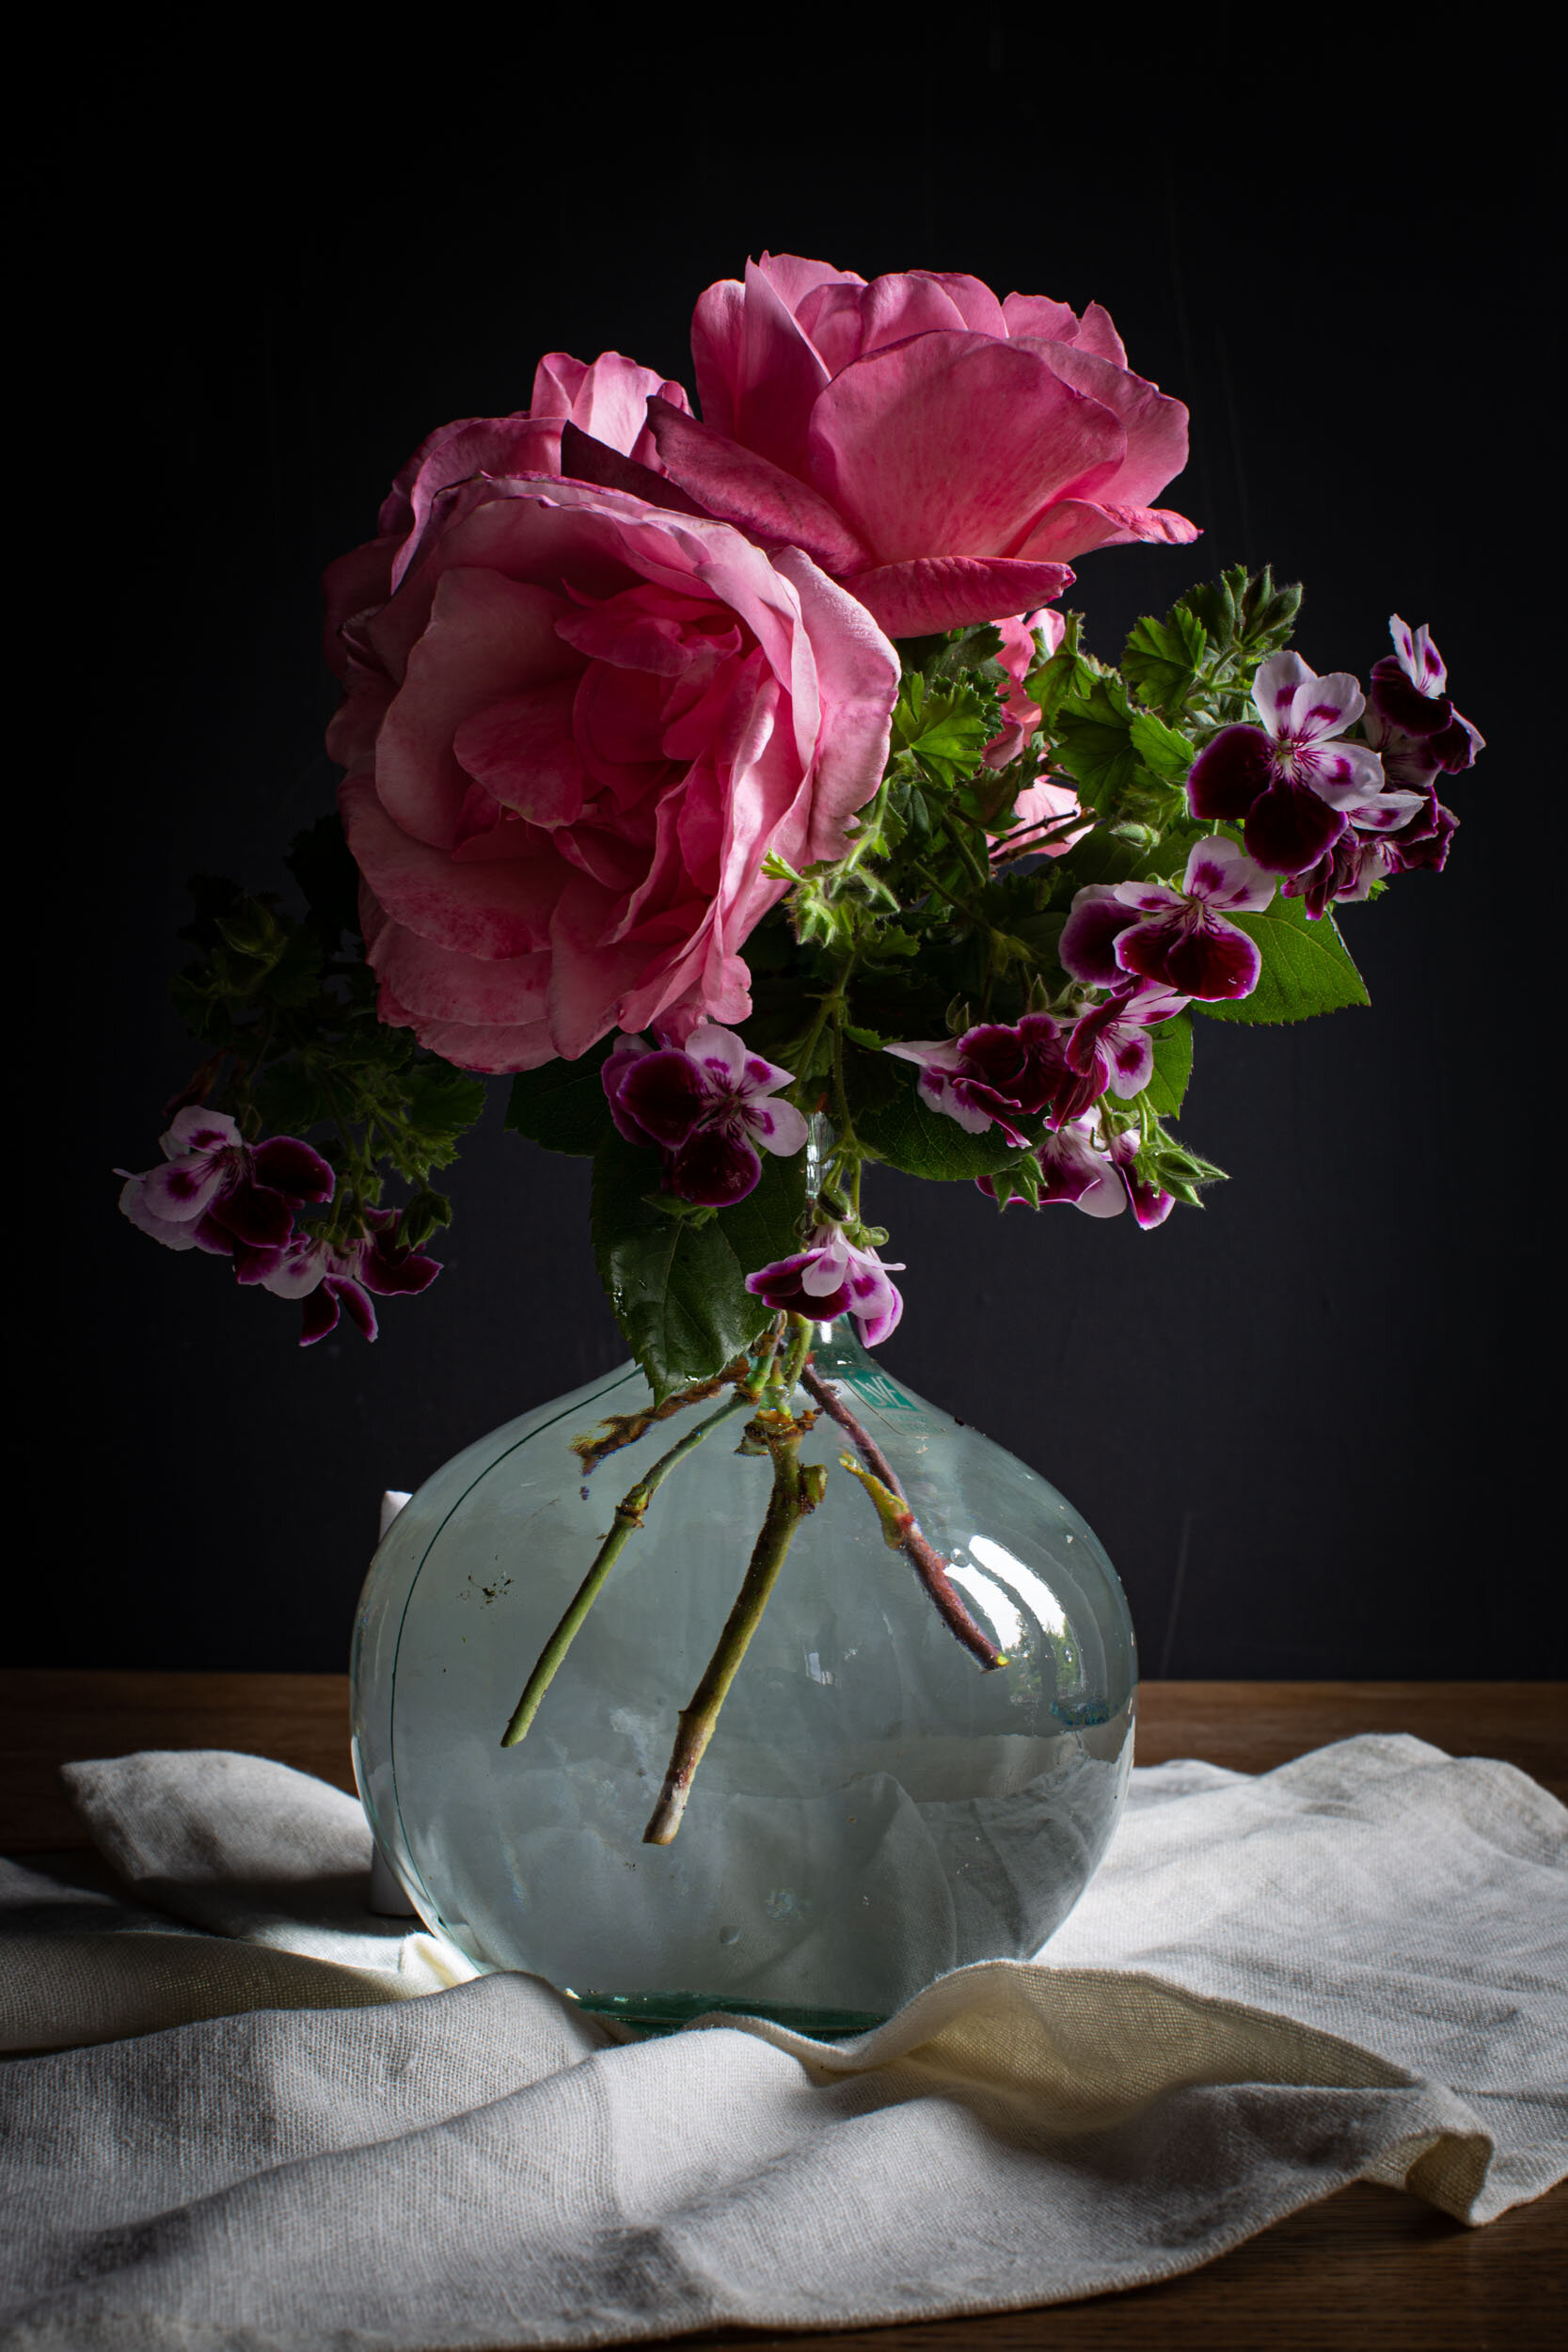 Stefania-Boglioli-Roses-and-Geranium-Vase-Still-Life-0368.jpg